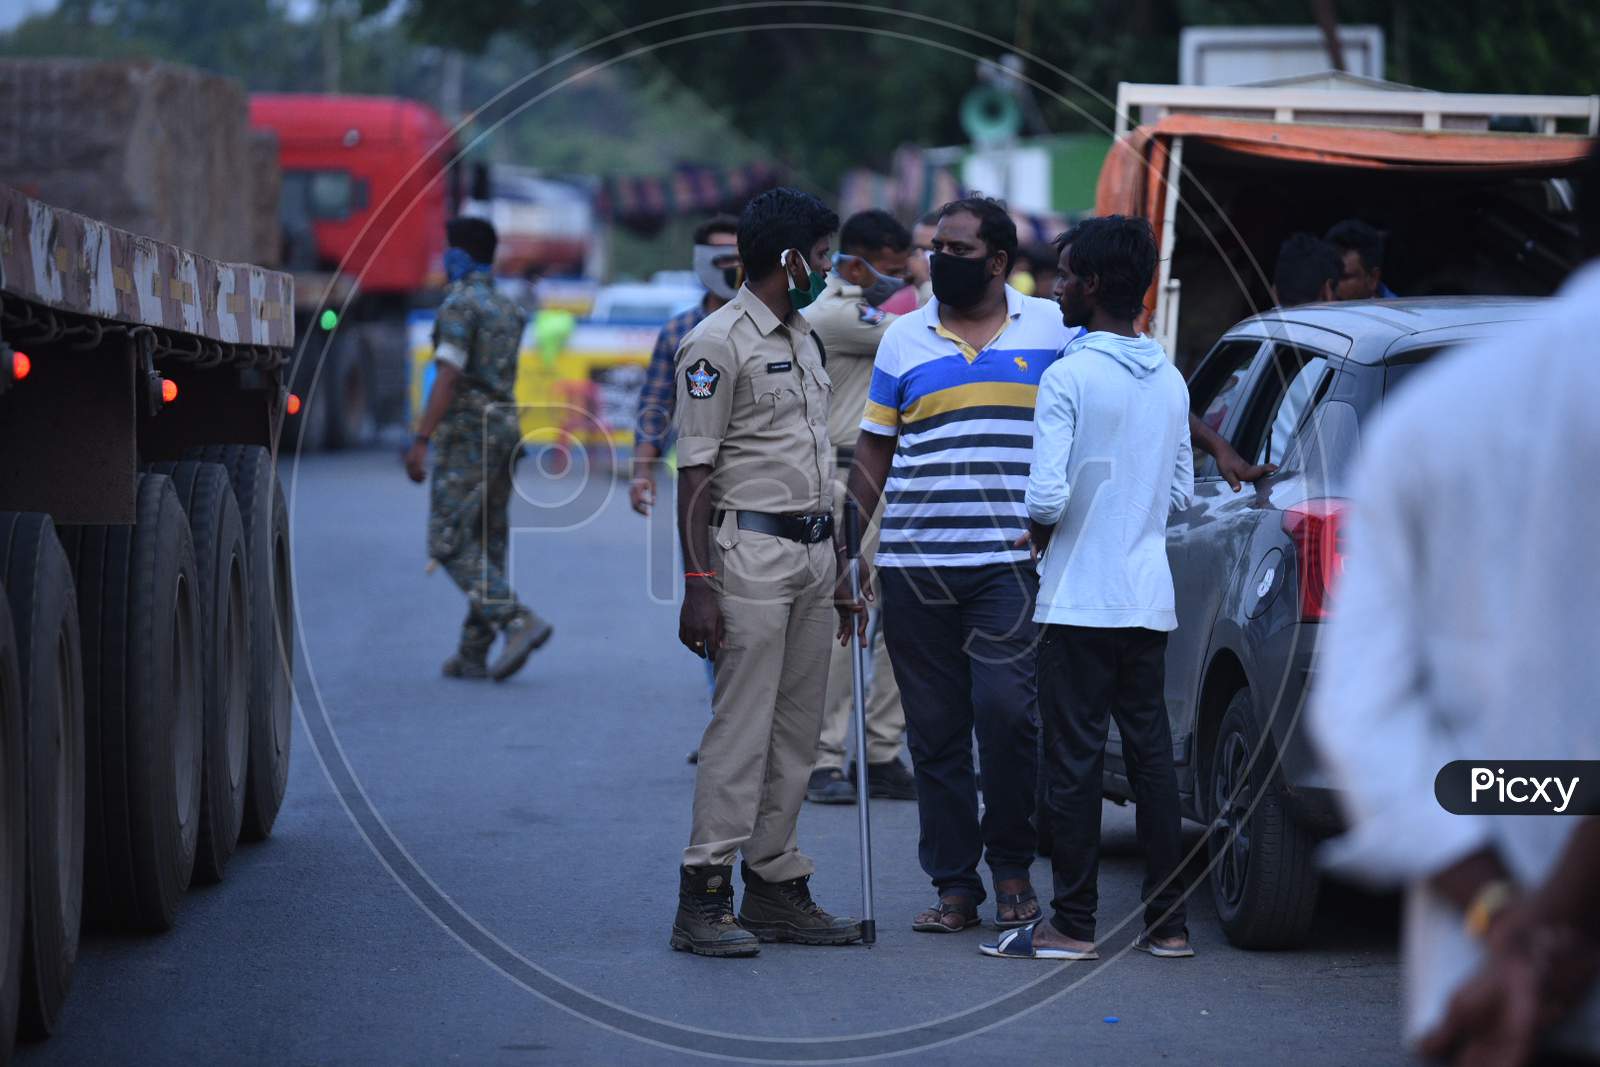 Telangana Police Checking The Vehicles At Andhra Pradesh-Telangana Border During Nationwide Lockdown Amidst Coronavirus Or COVID-19 Pandemic In Aswaraopeta, Telangana